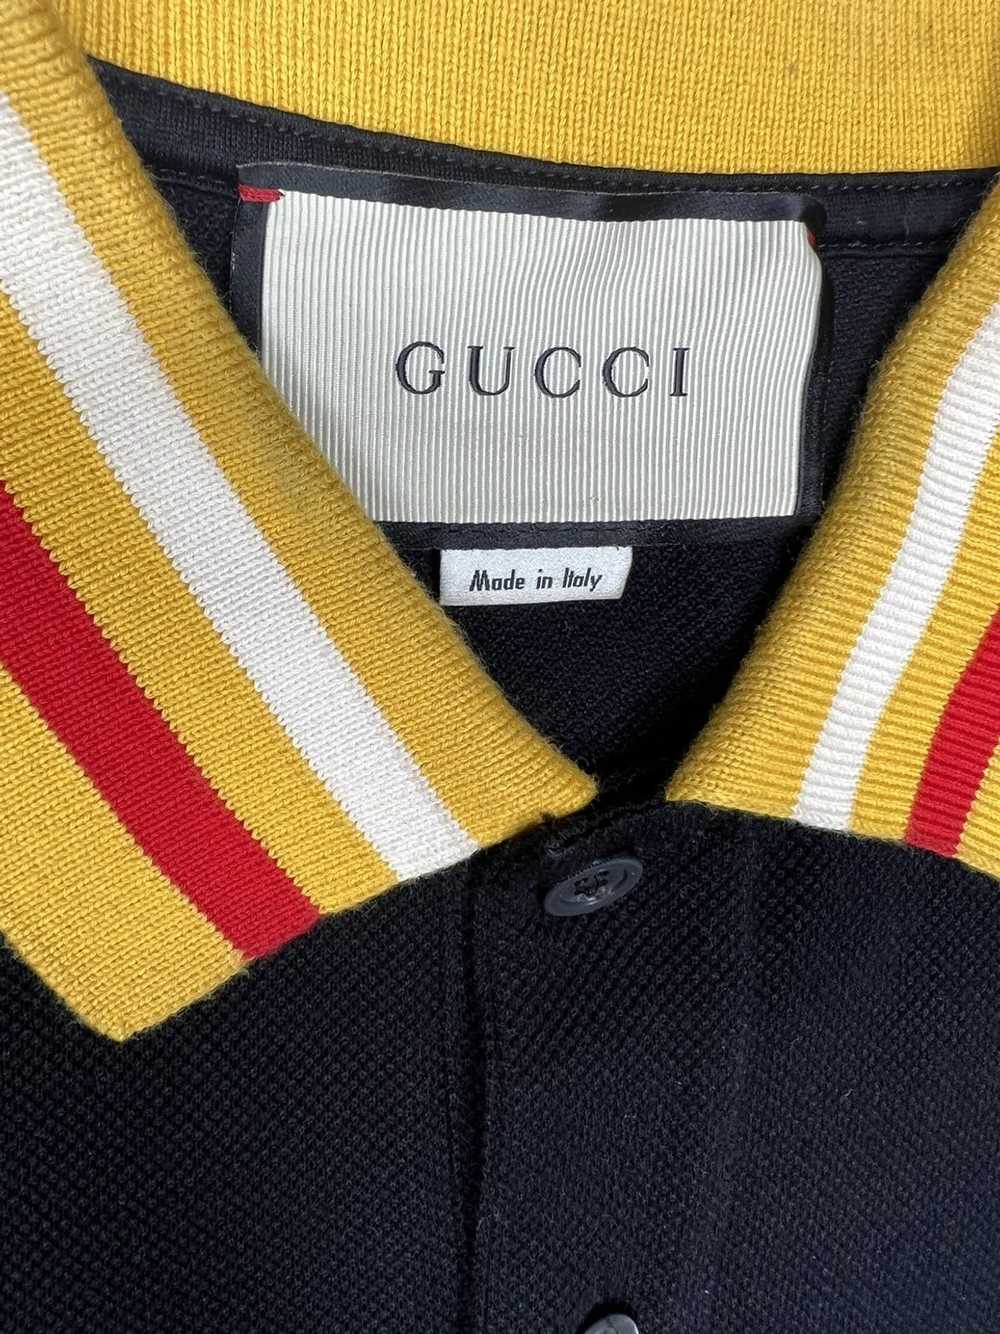 Gucci Gucci Polo Shirt - image 2